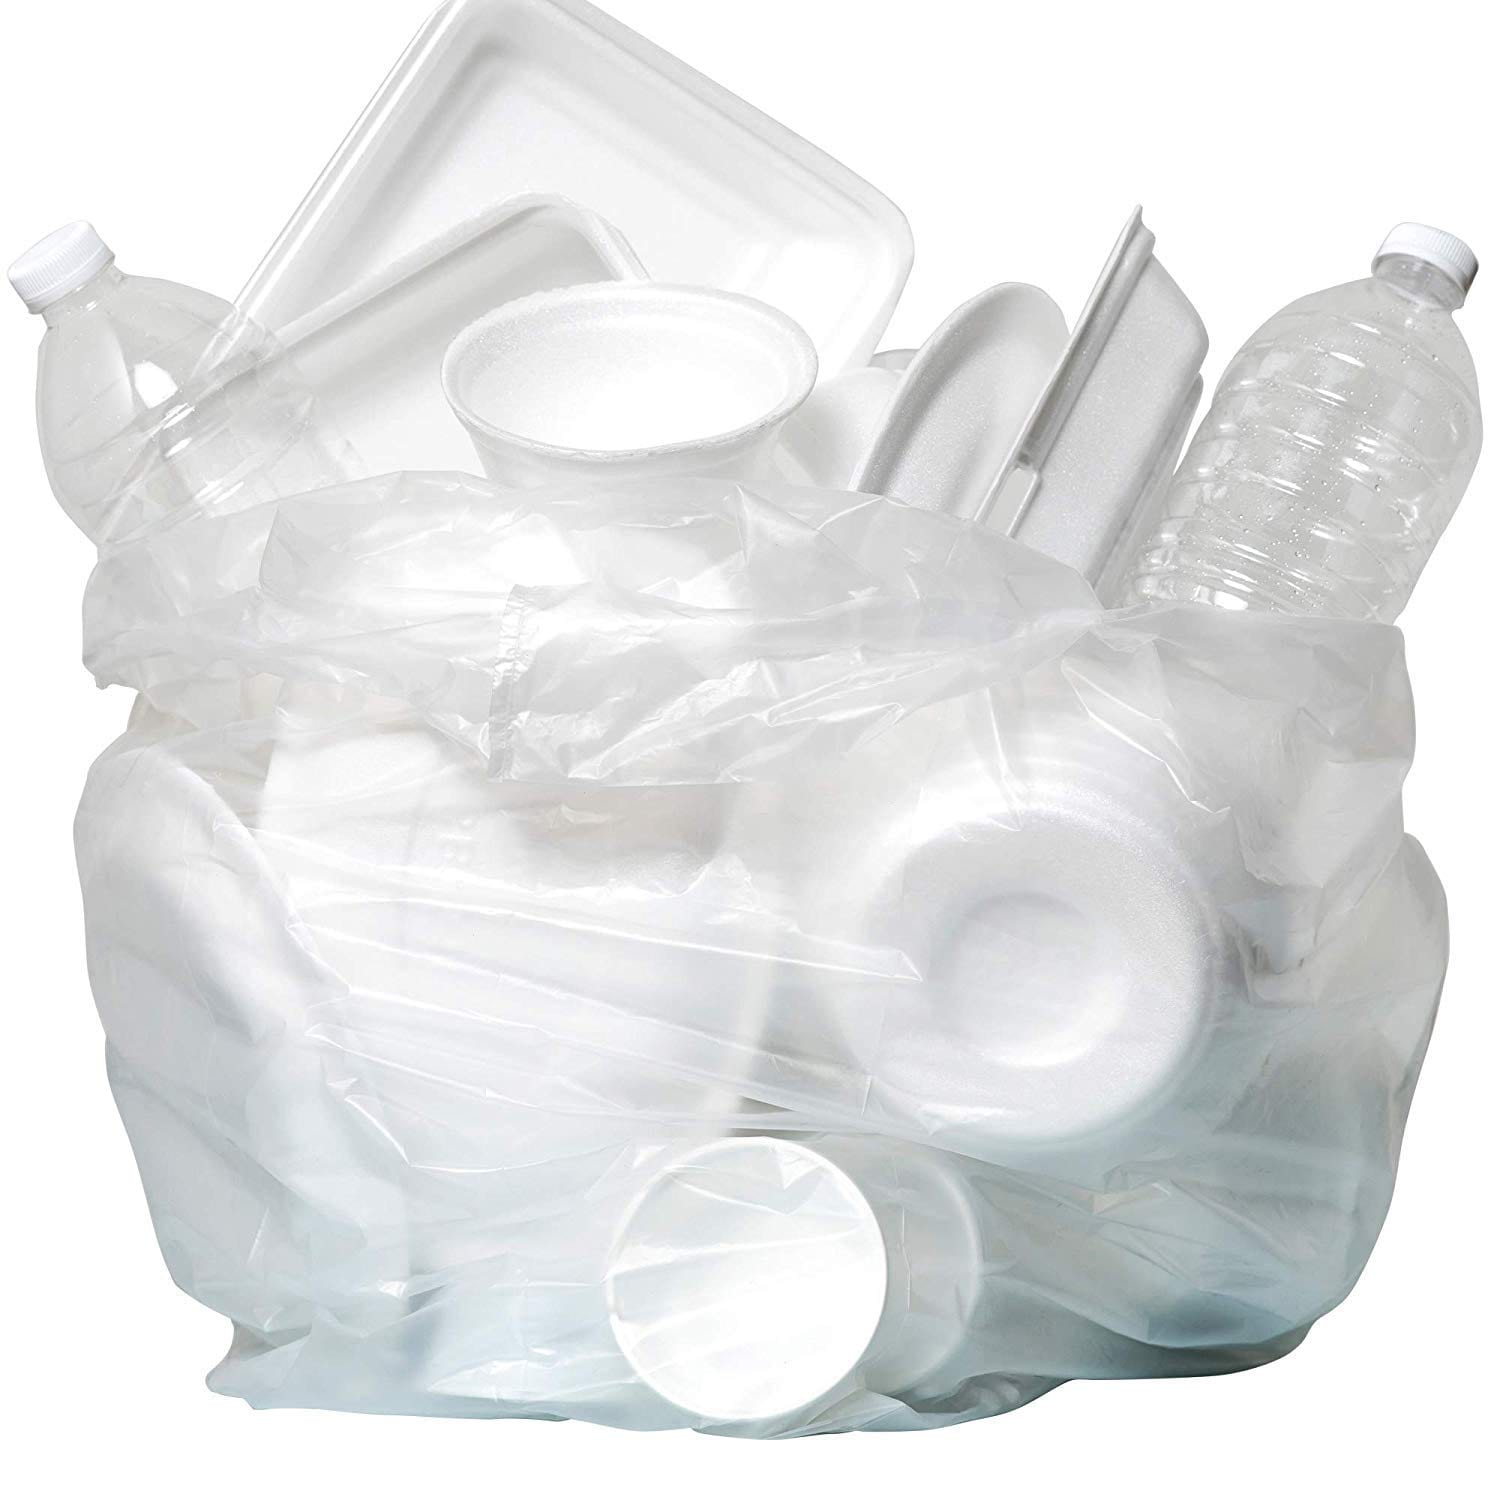 Aluf Plastics 20-30 Gallon Trash Bags, 500 Pack, High Density 13 Micron Gauge, Clear